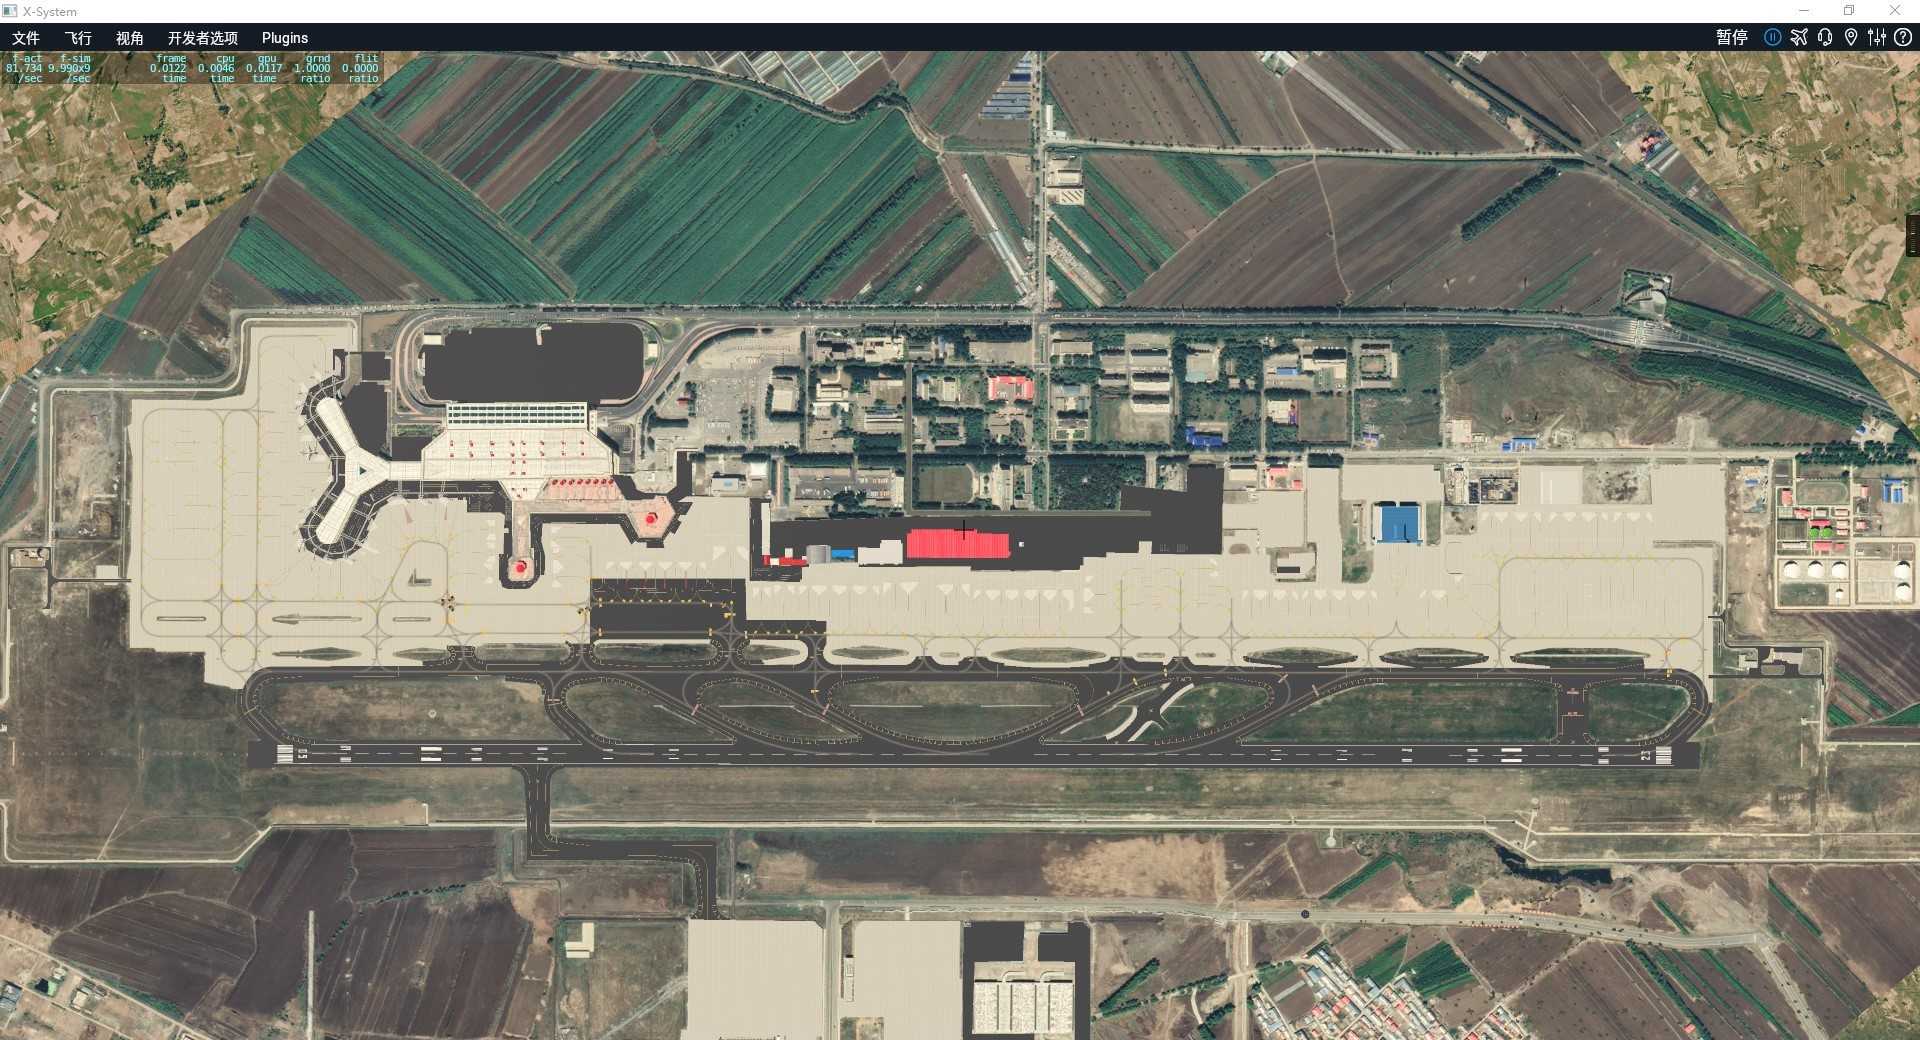 XP11哈尔滨机场地景V2.0制作Log-5 &amp; 为新地景开发组征名-3860 